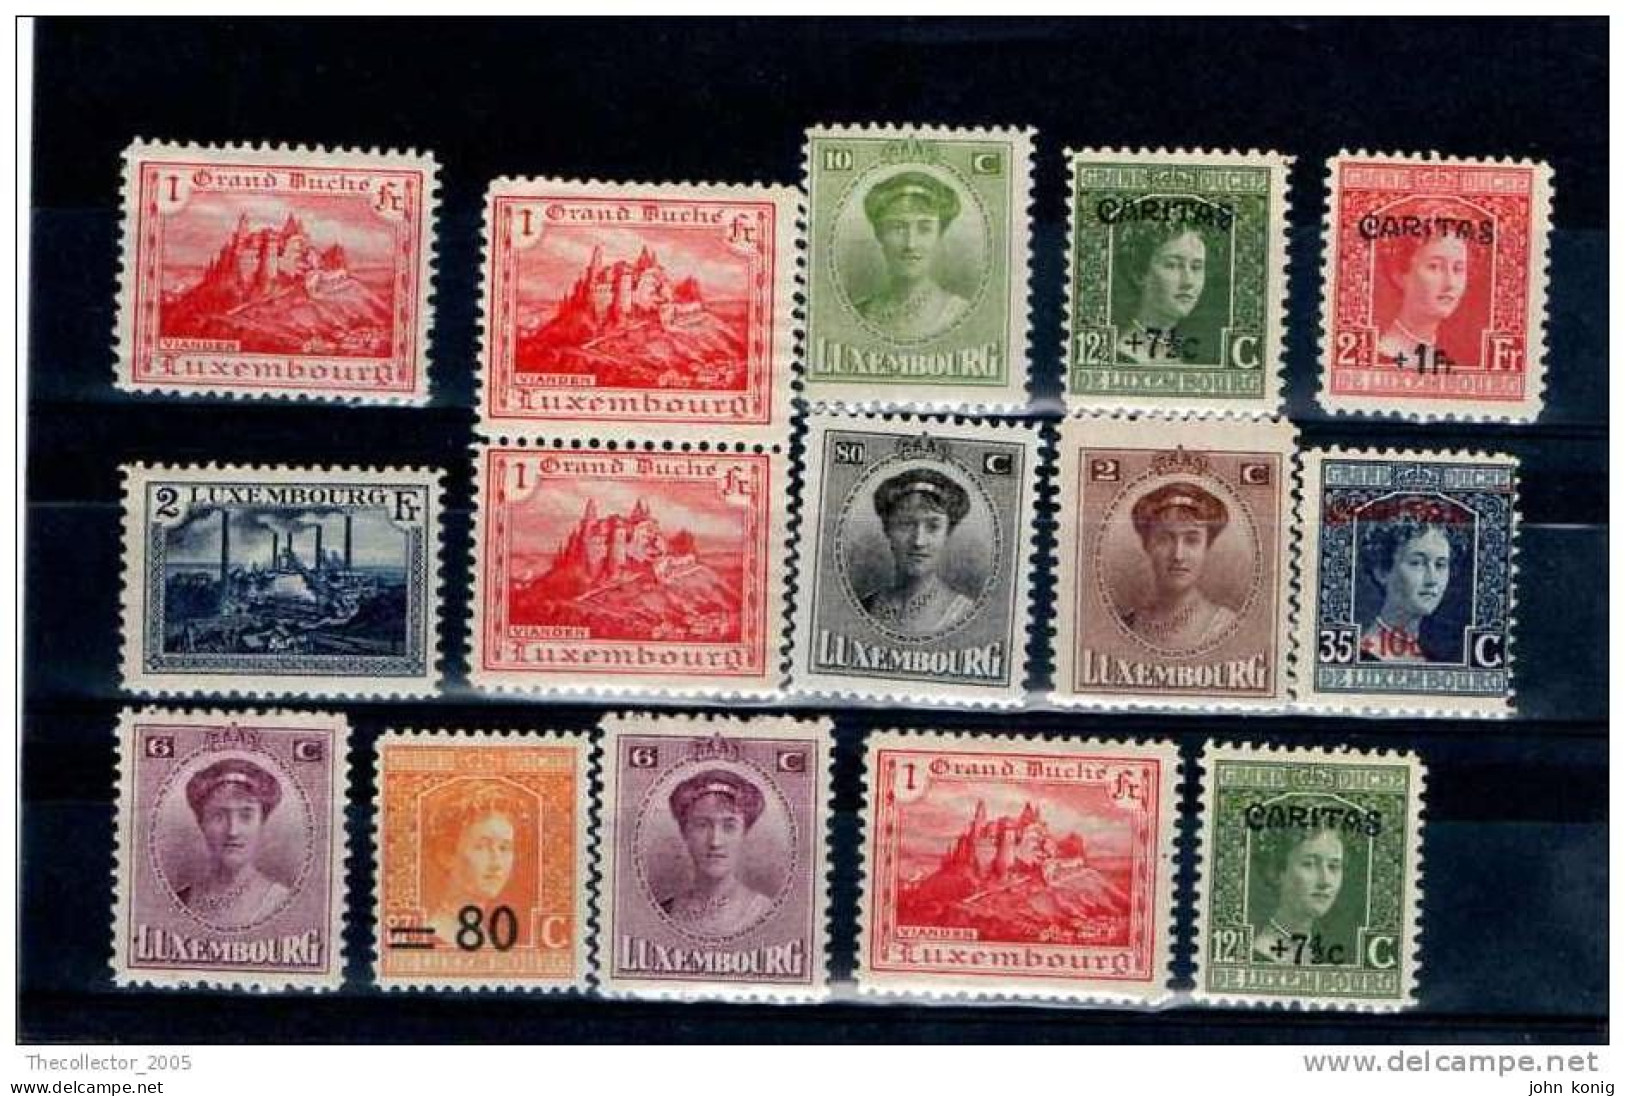 Luxembourg - Lussemburgo - Stamps Lot New-mint - Neue - Francobolli Lotto Nuovi (CARITAS) - Sammlungen